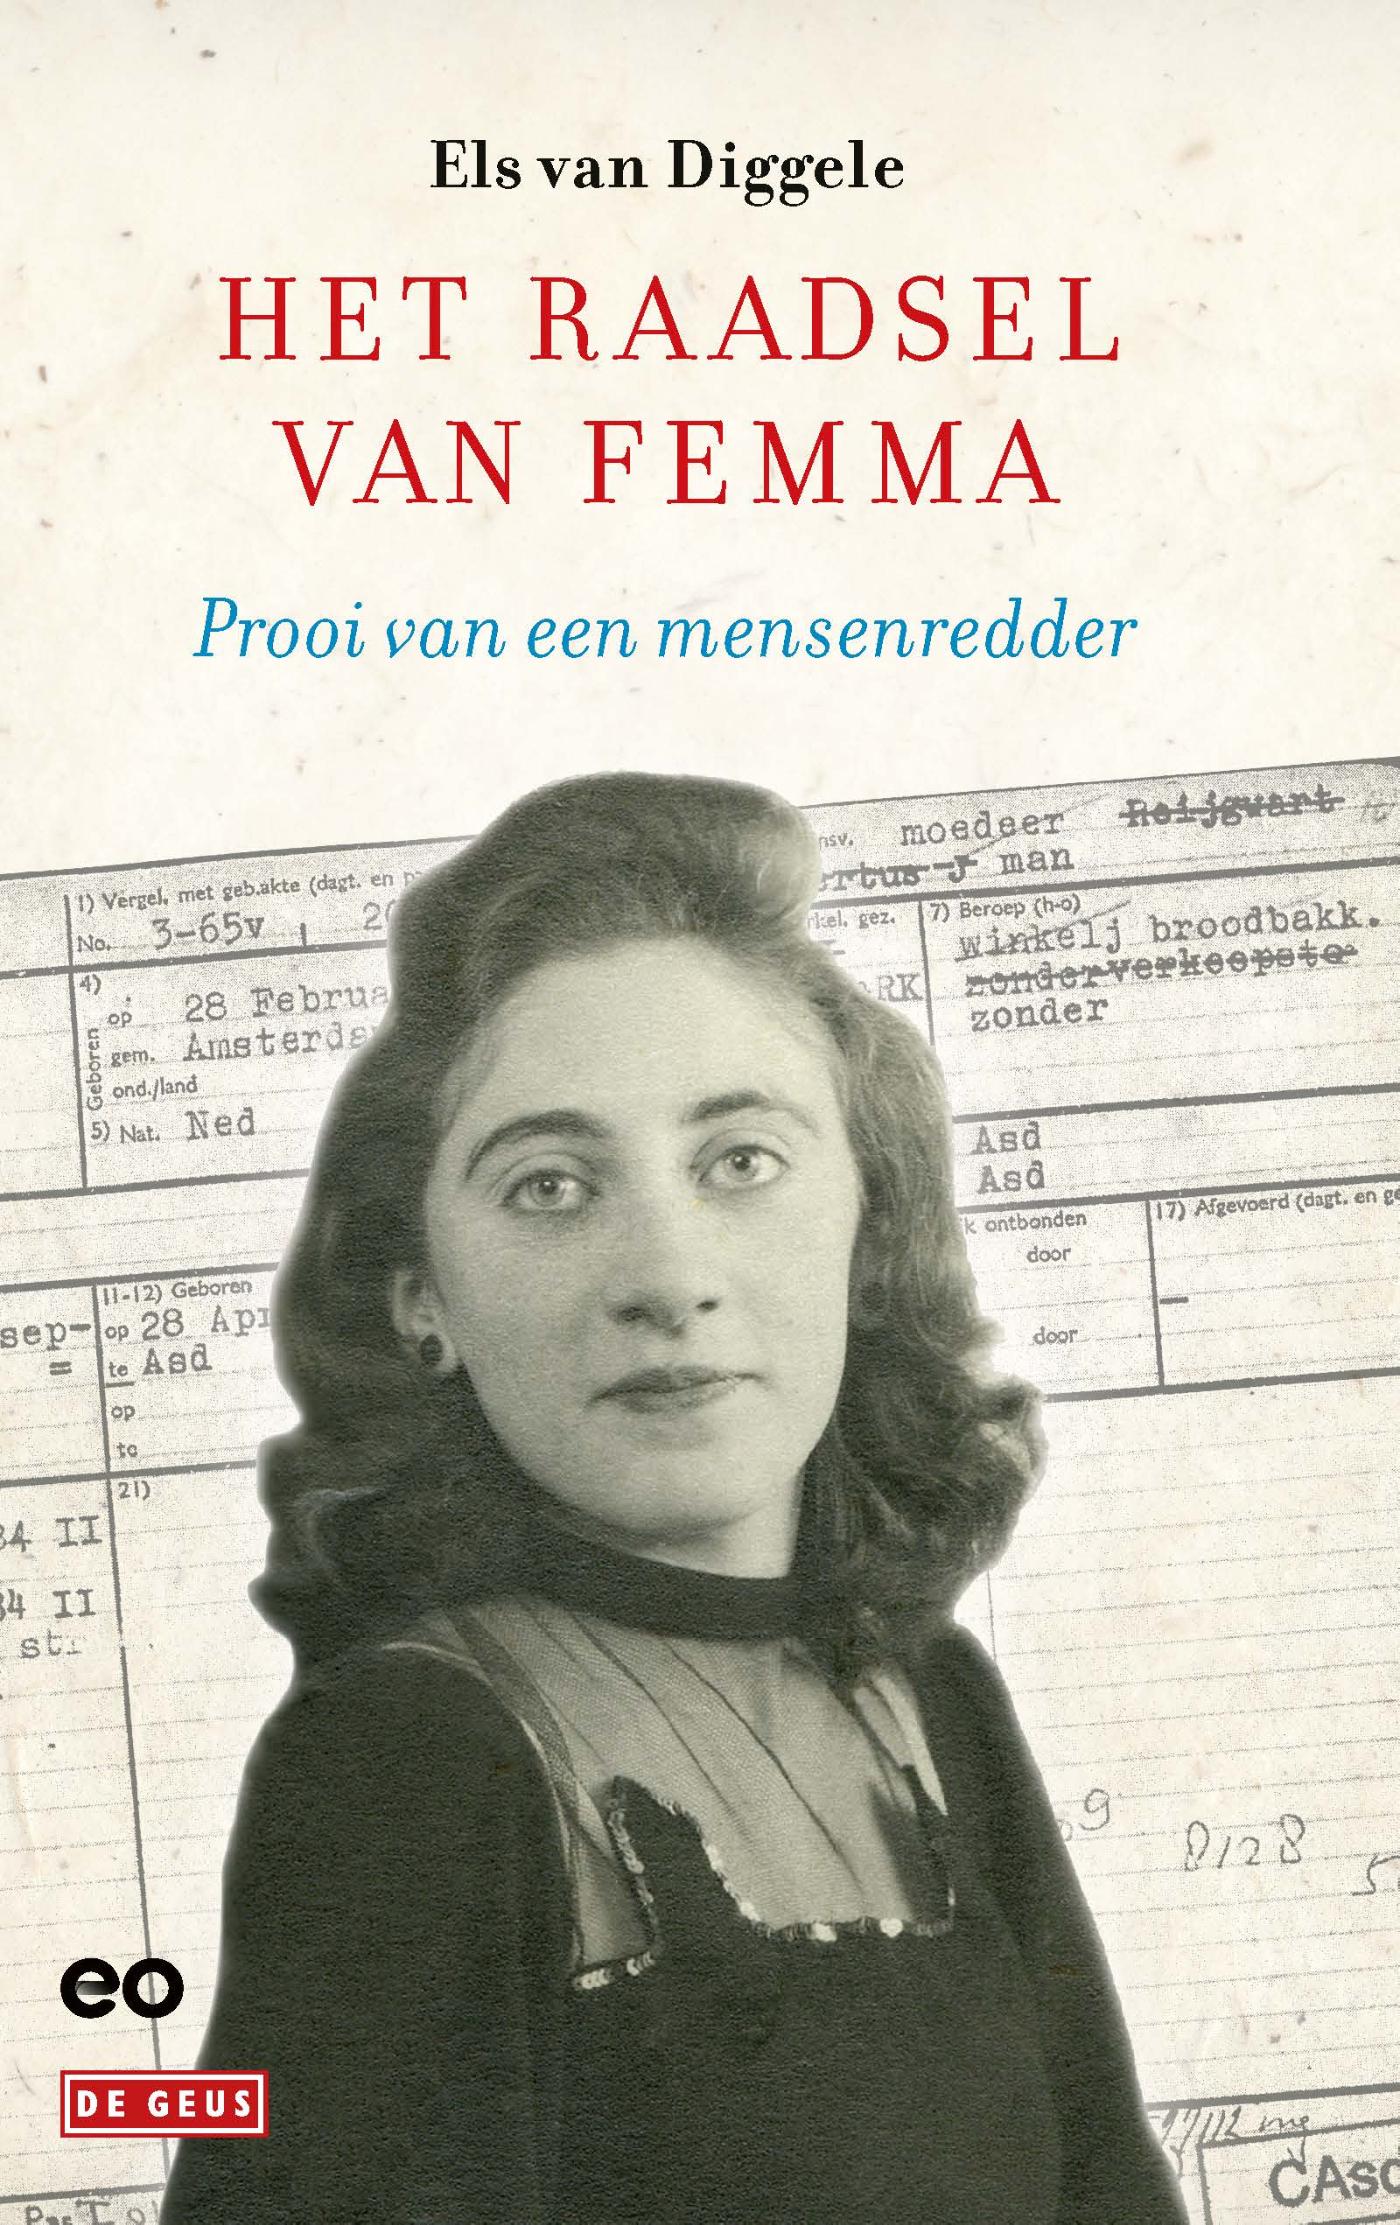 Het raadsel van Femma (Ebook)